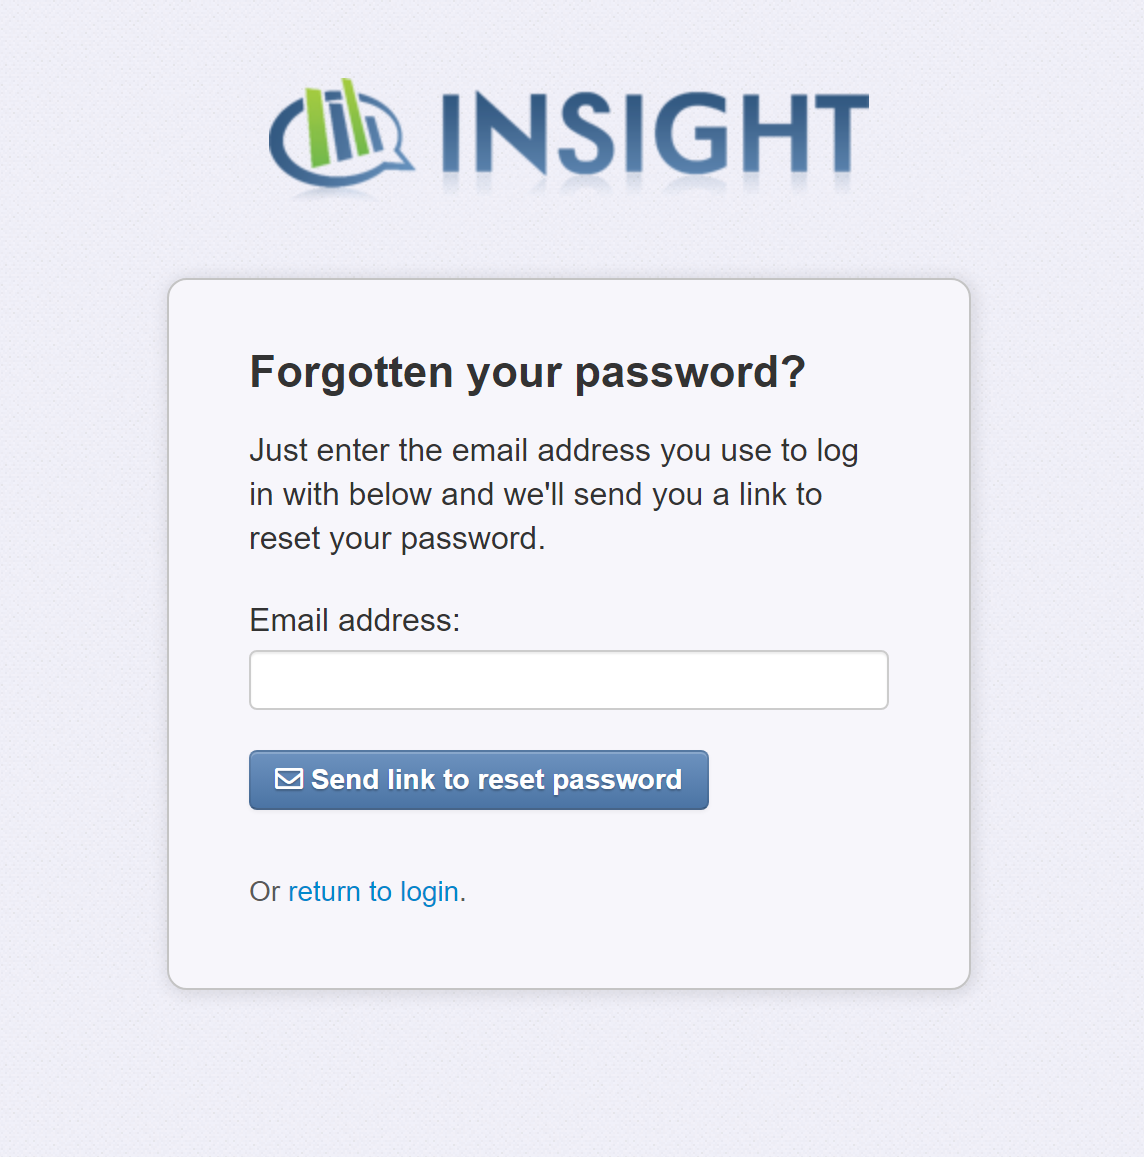 Forgotten password screen